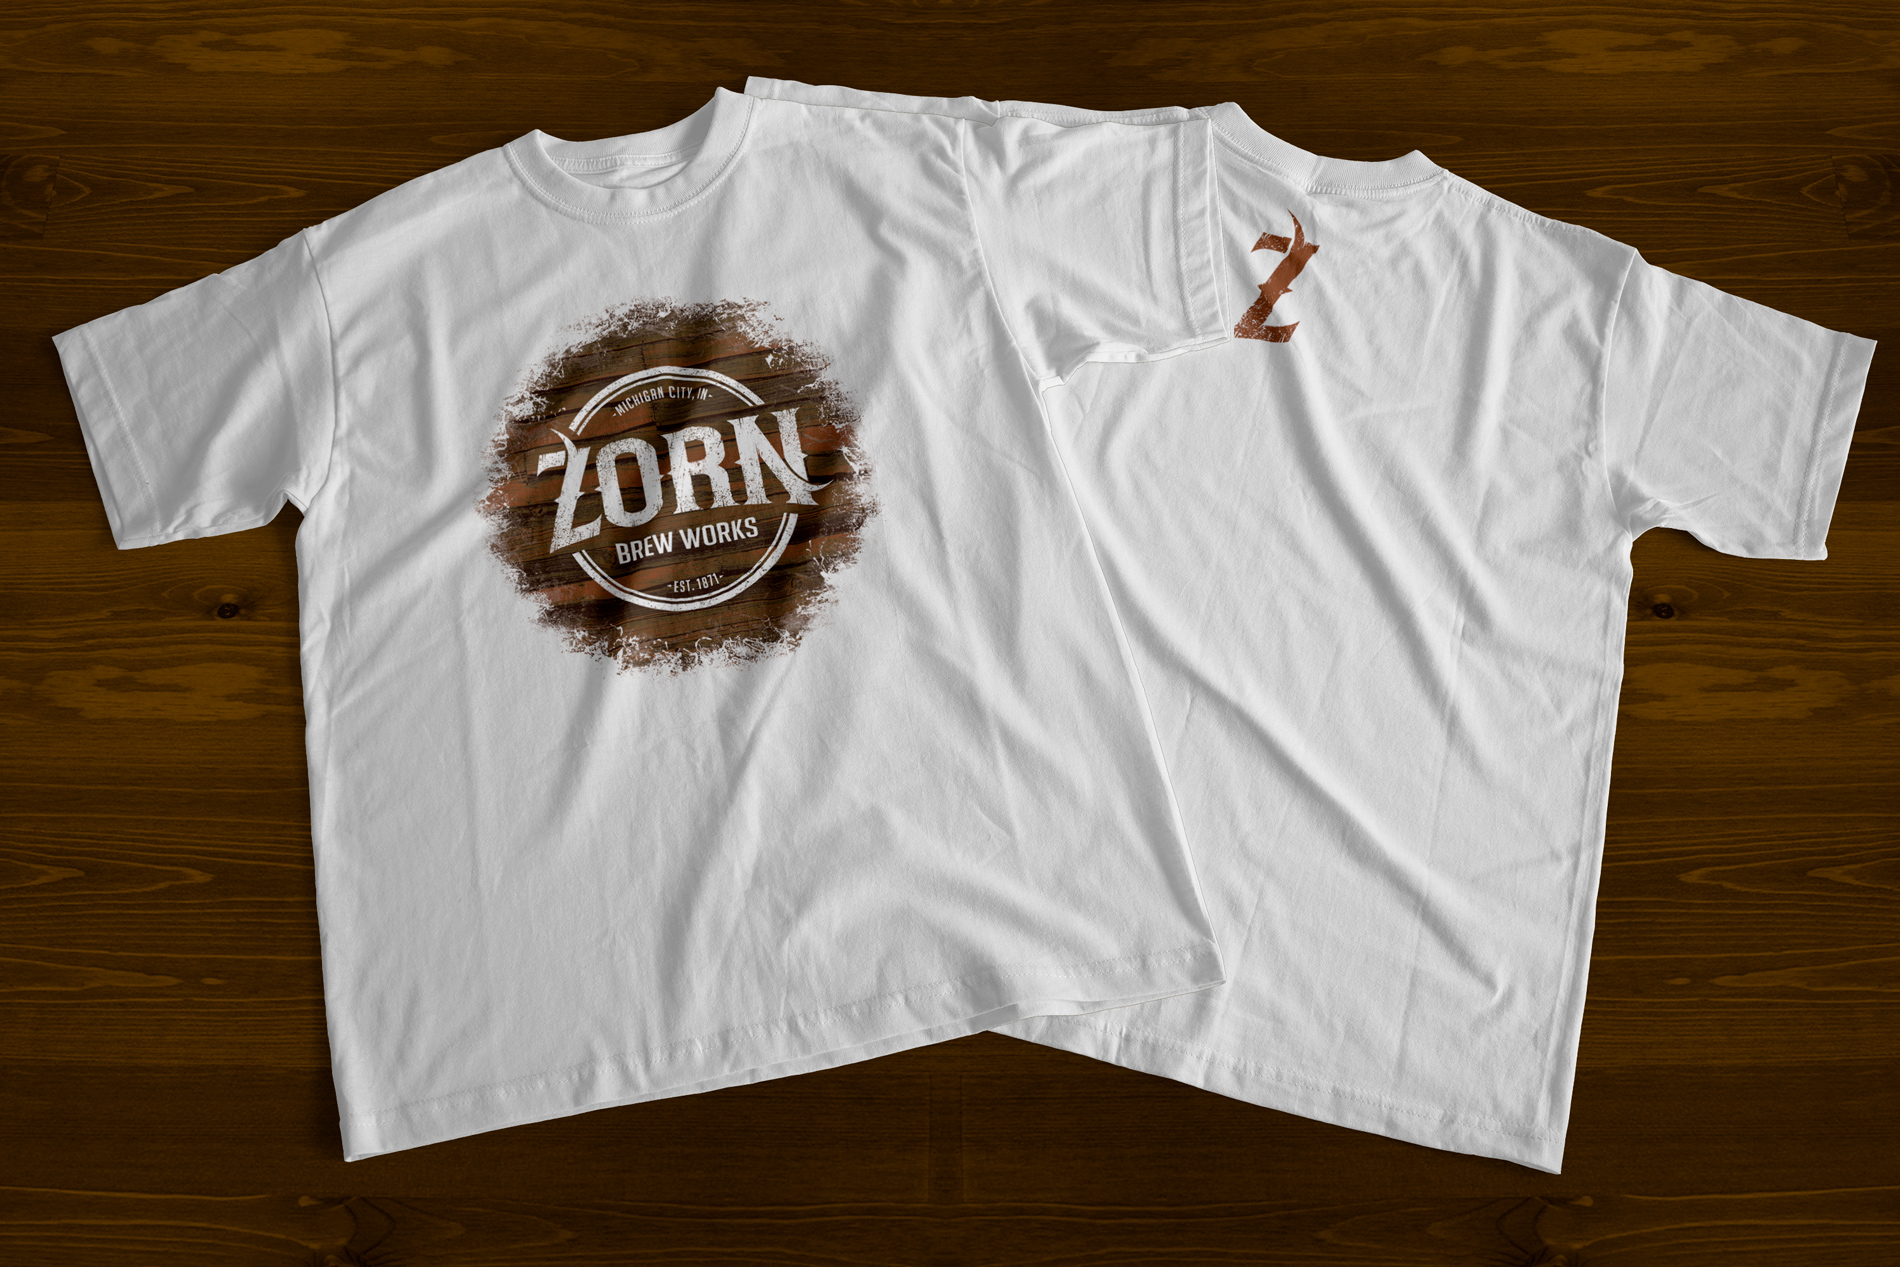 Zorn Brew Works t-shirt design